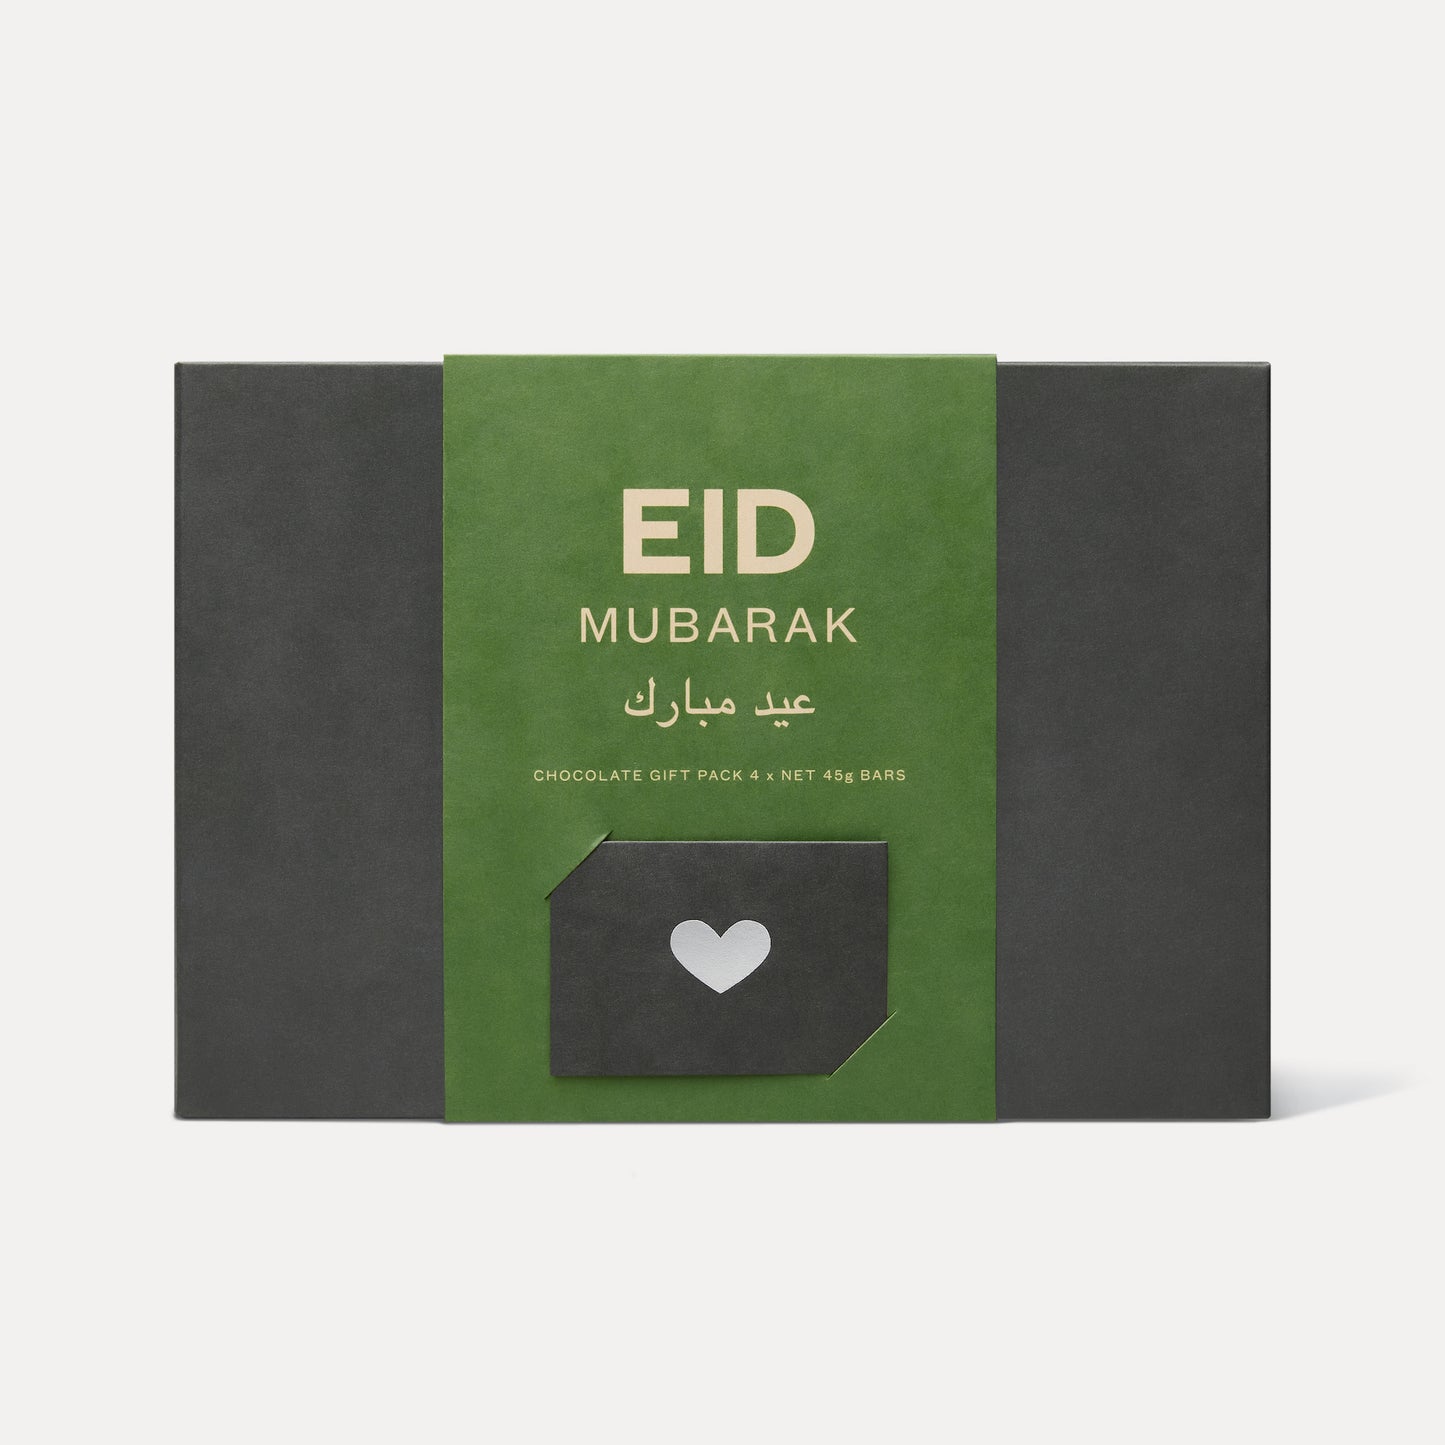 Eid Mubarak Gift Pack